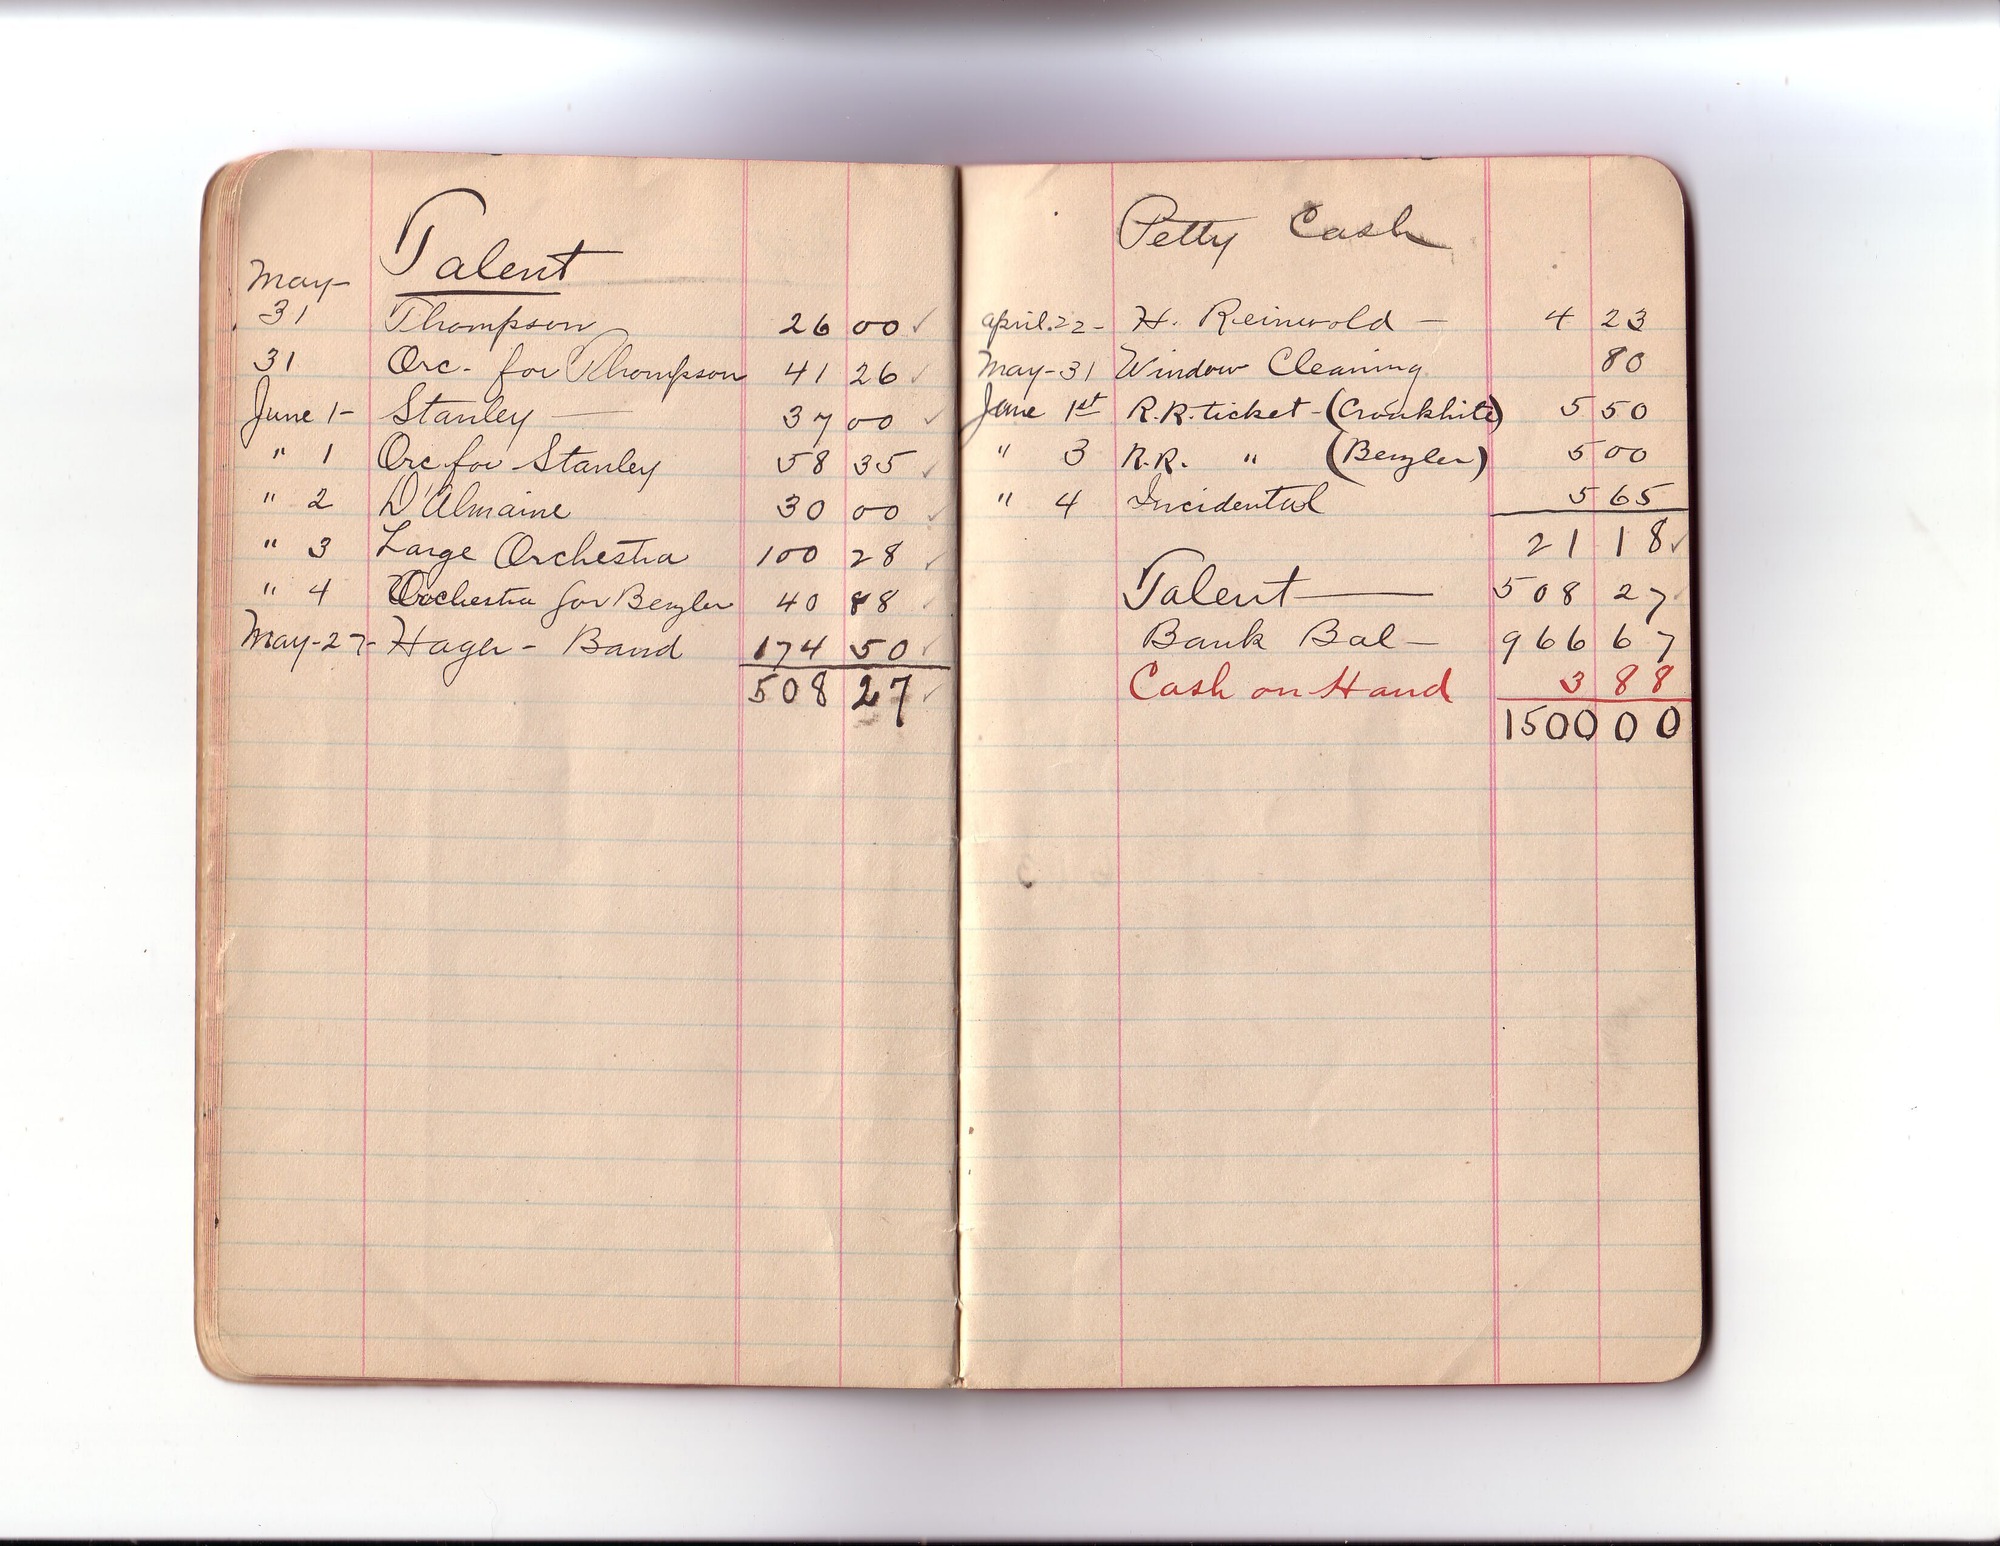 Thomas Edison's New York City Recording Studio Cash Book 01 (of 21), Image 11 (of 41).